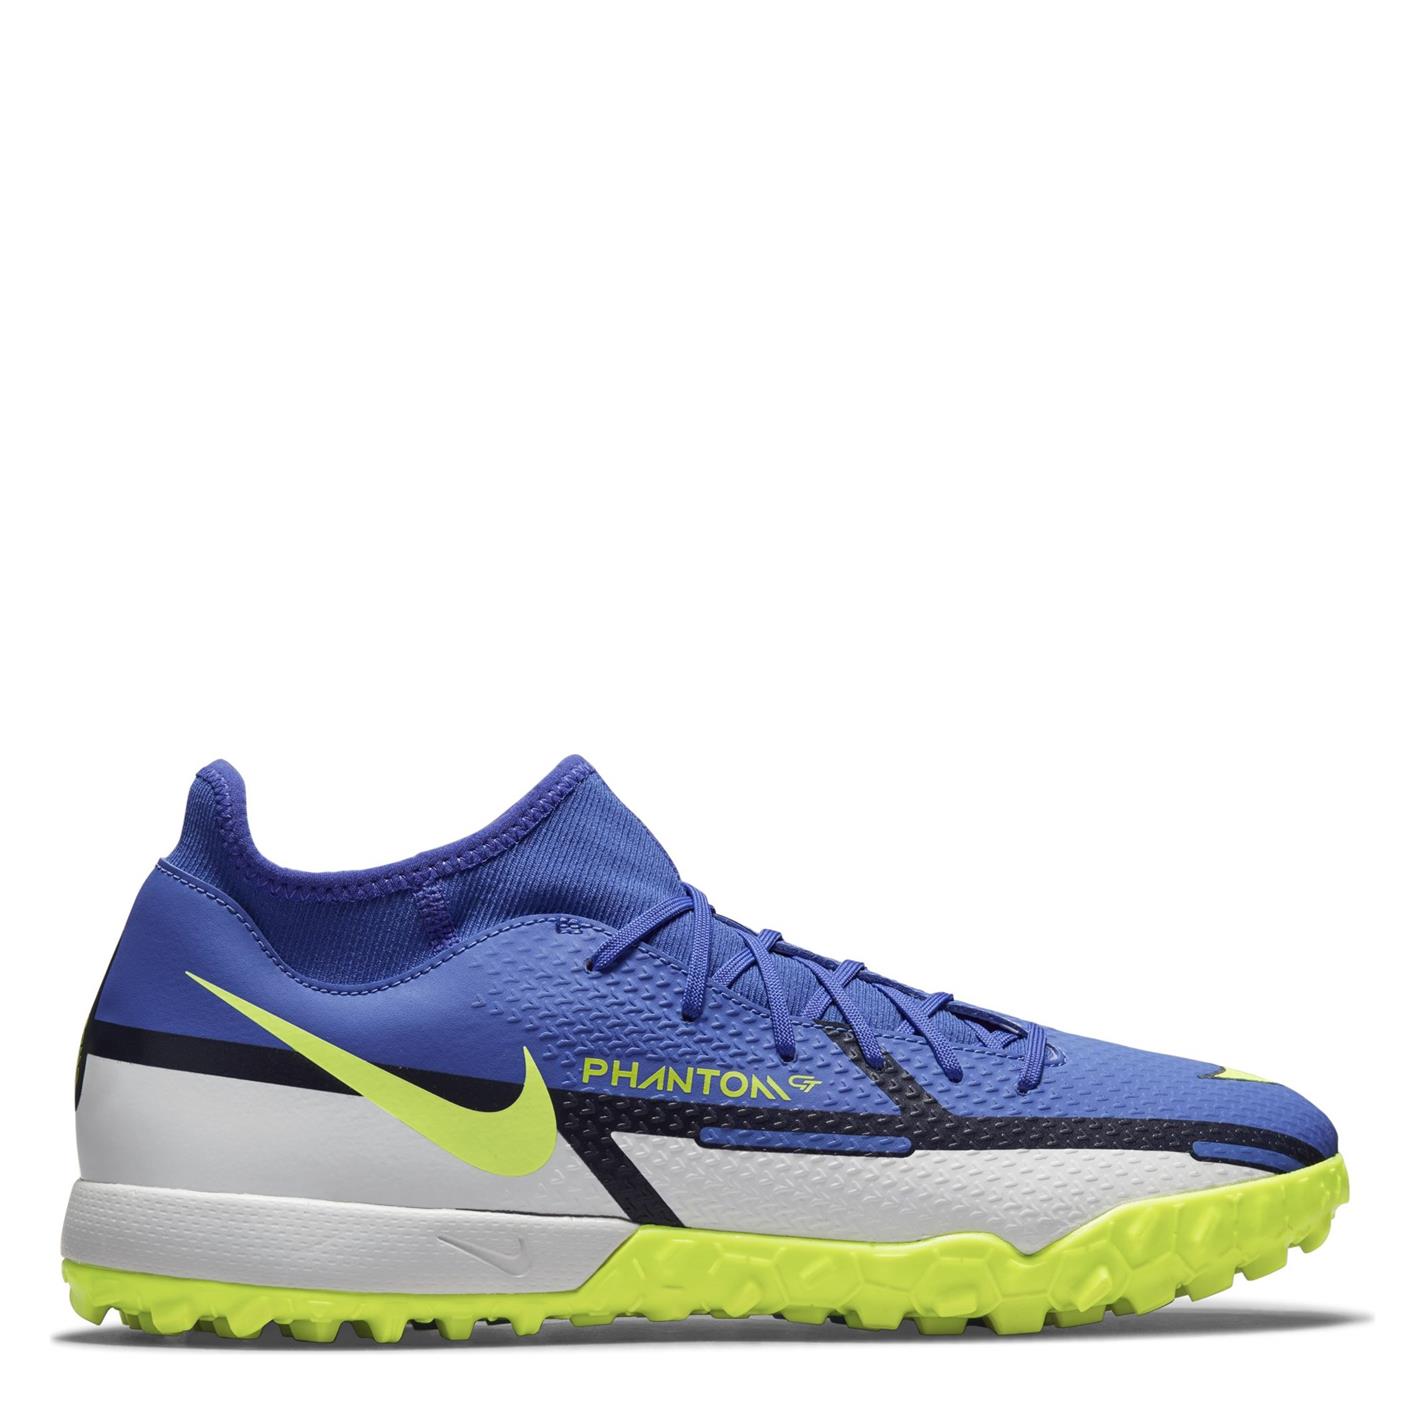 Adidasi Gazon Sintetic Nike Phantom GT Academy DF albastru gri